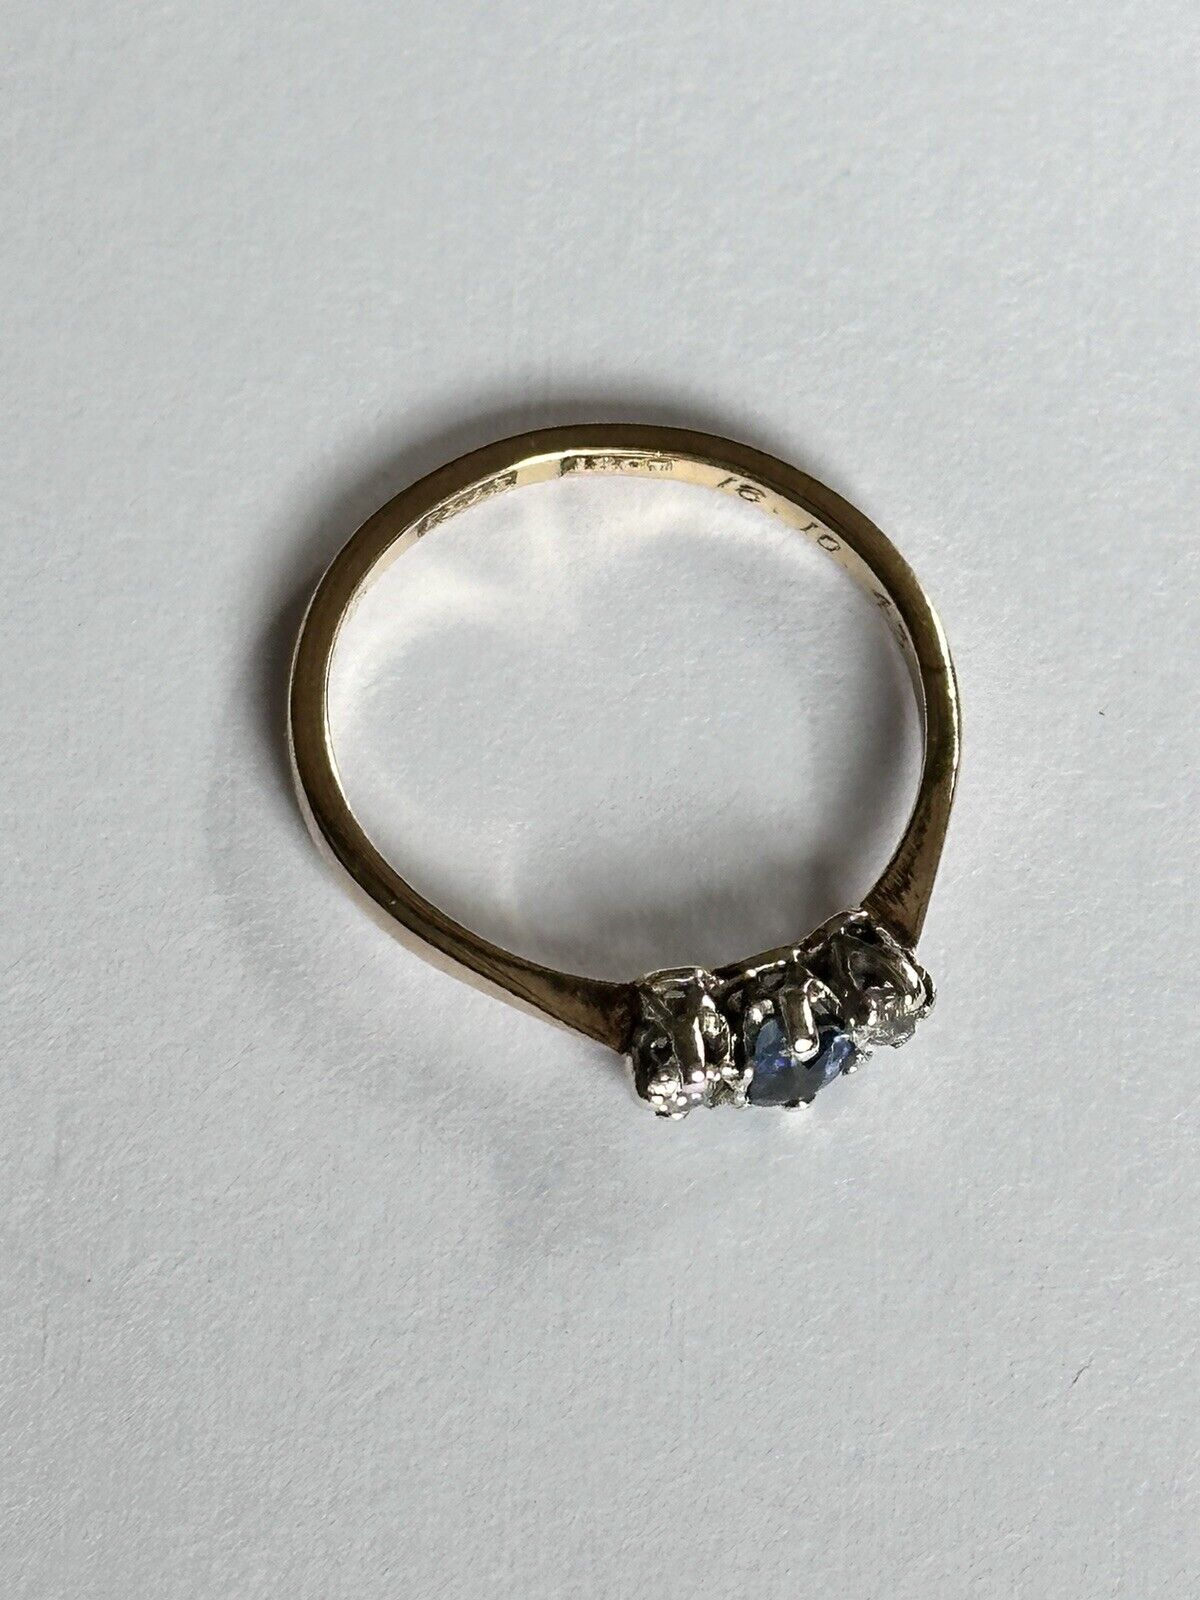 Vintage 18ct Gold And Platinum Diamond Sapphire Ring